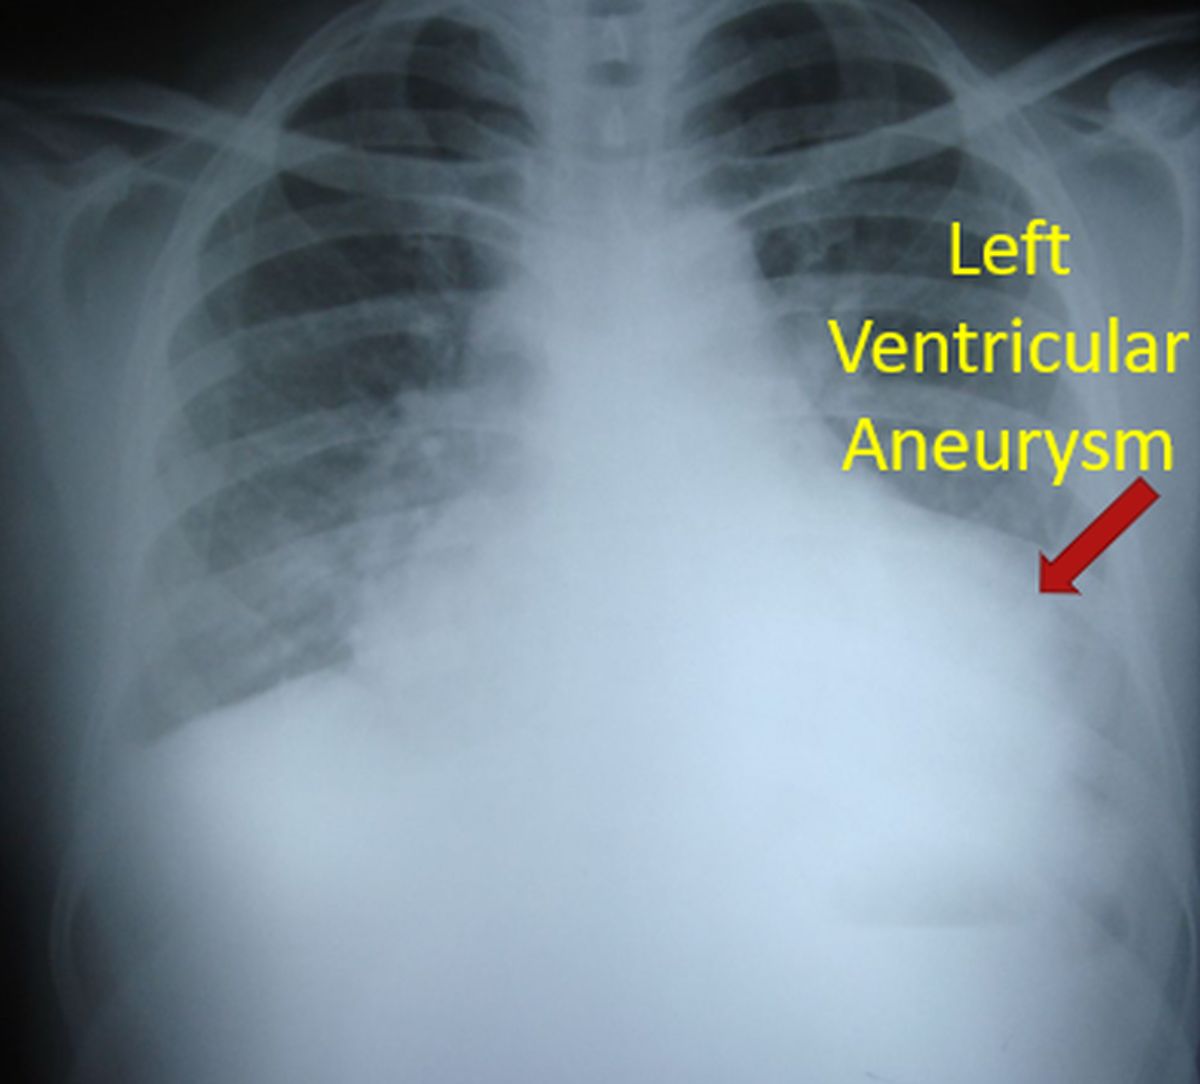 Left Ventricular Aneurysm